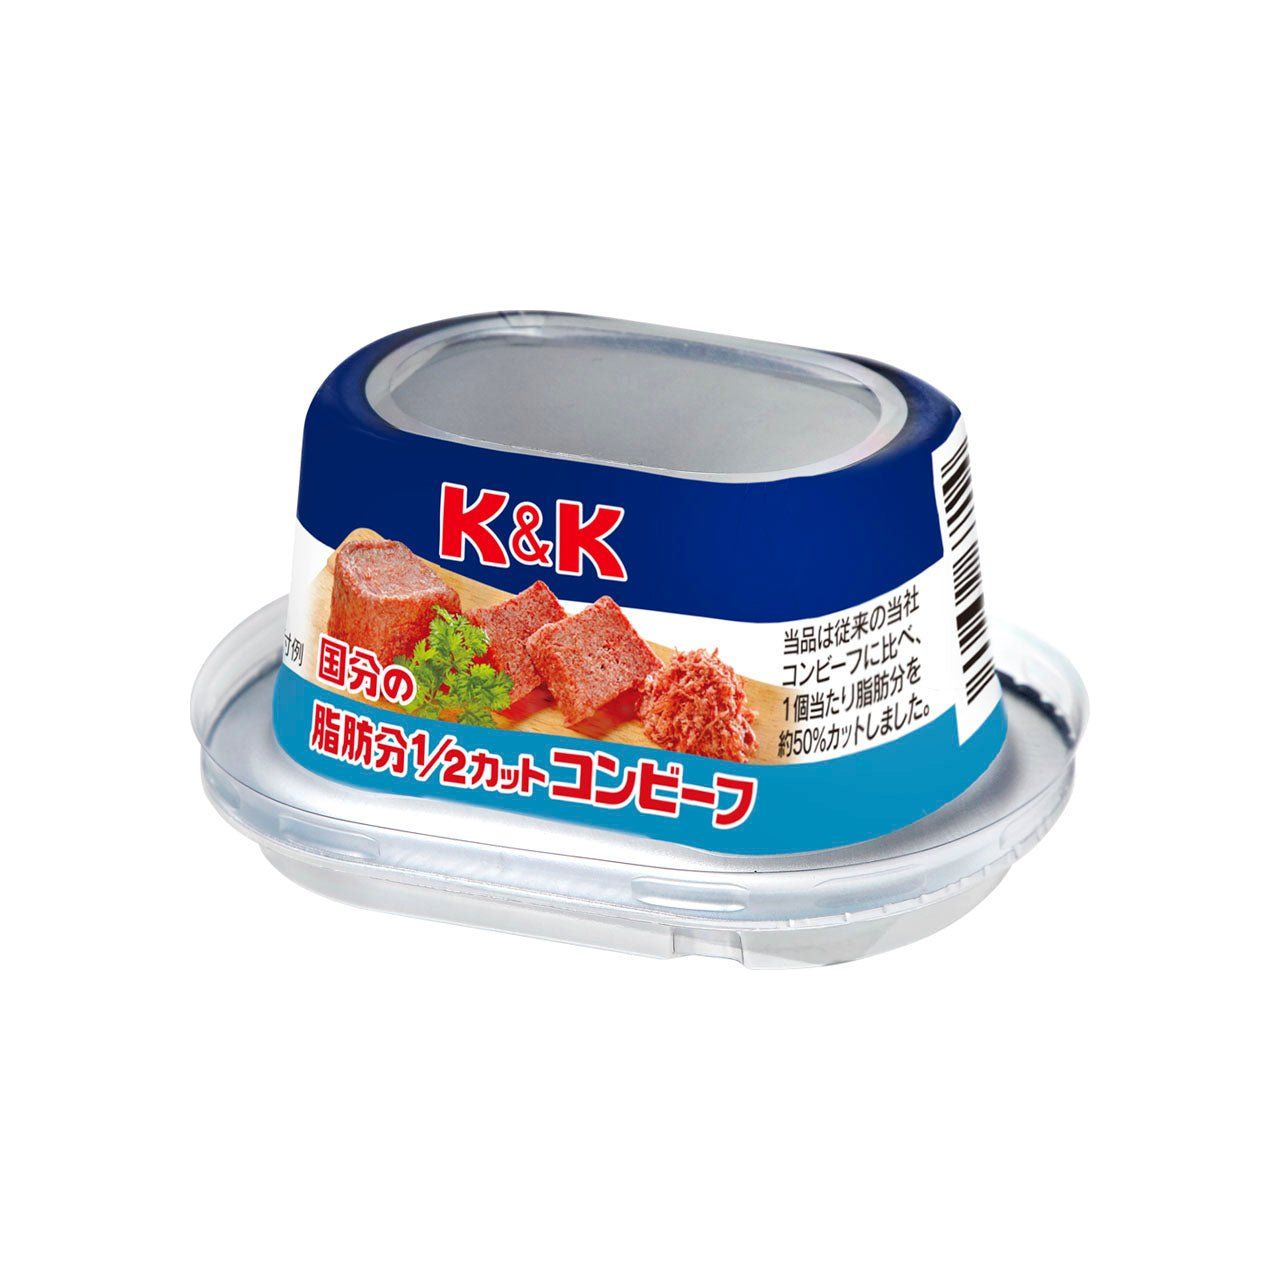 K & K Kokubu Fat 1/2 Cut Combef